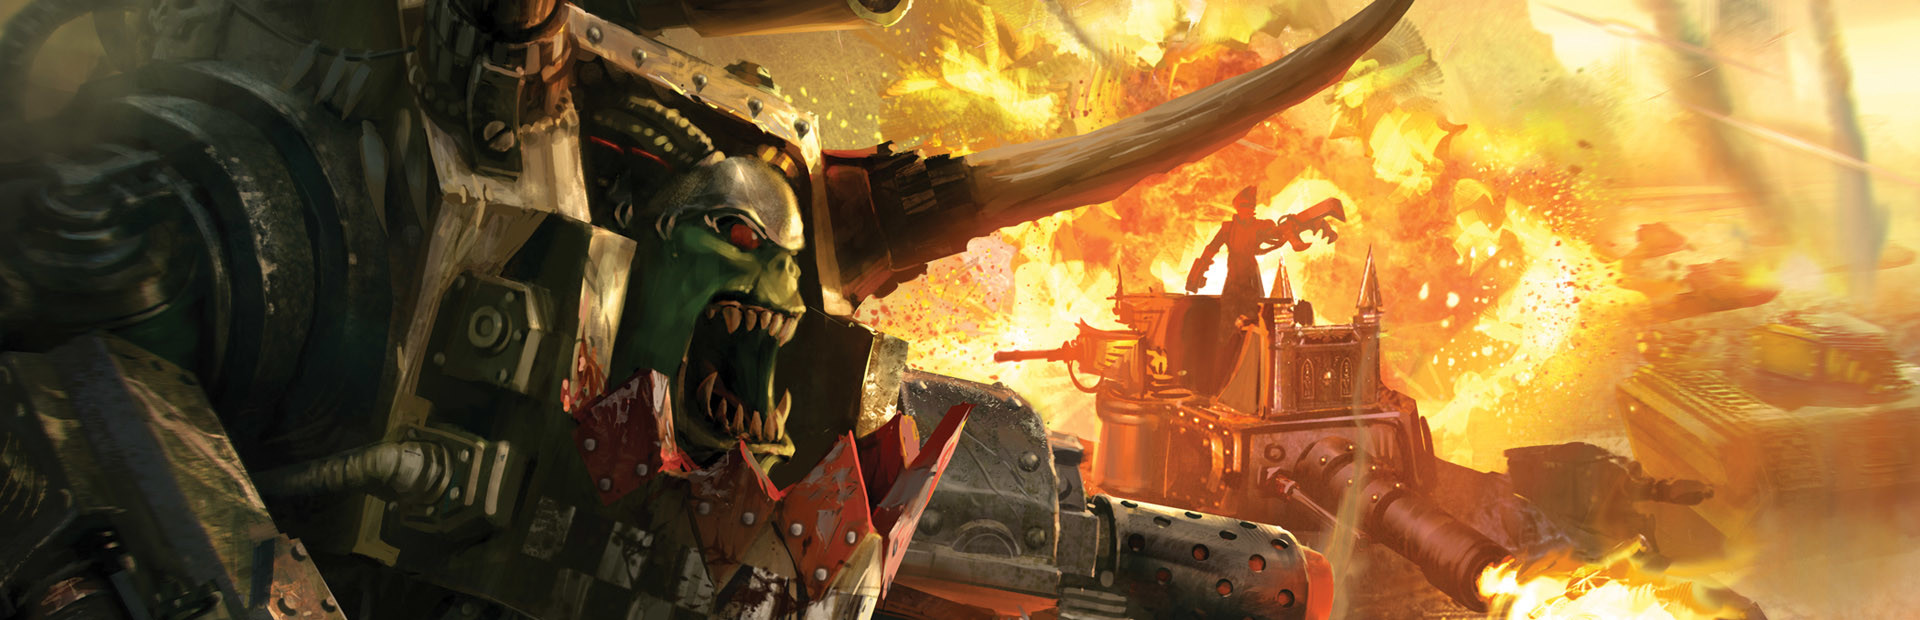 Warhammer 40,000: Armageddon cover image